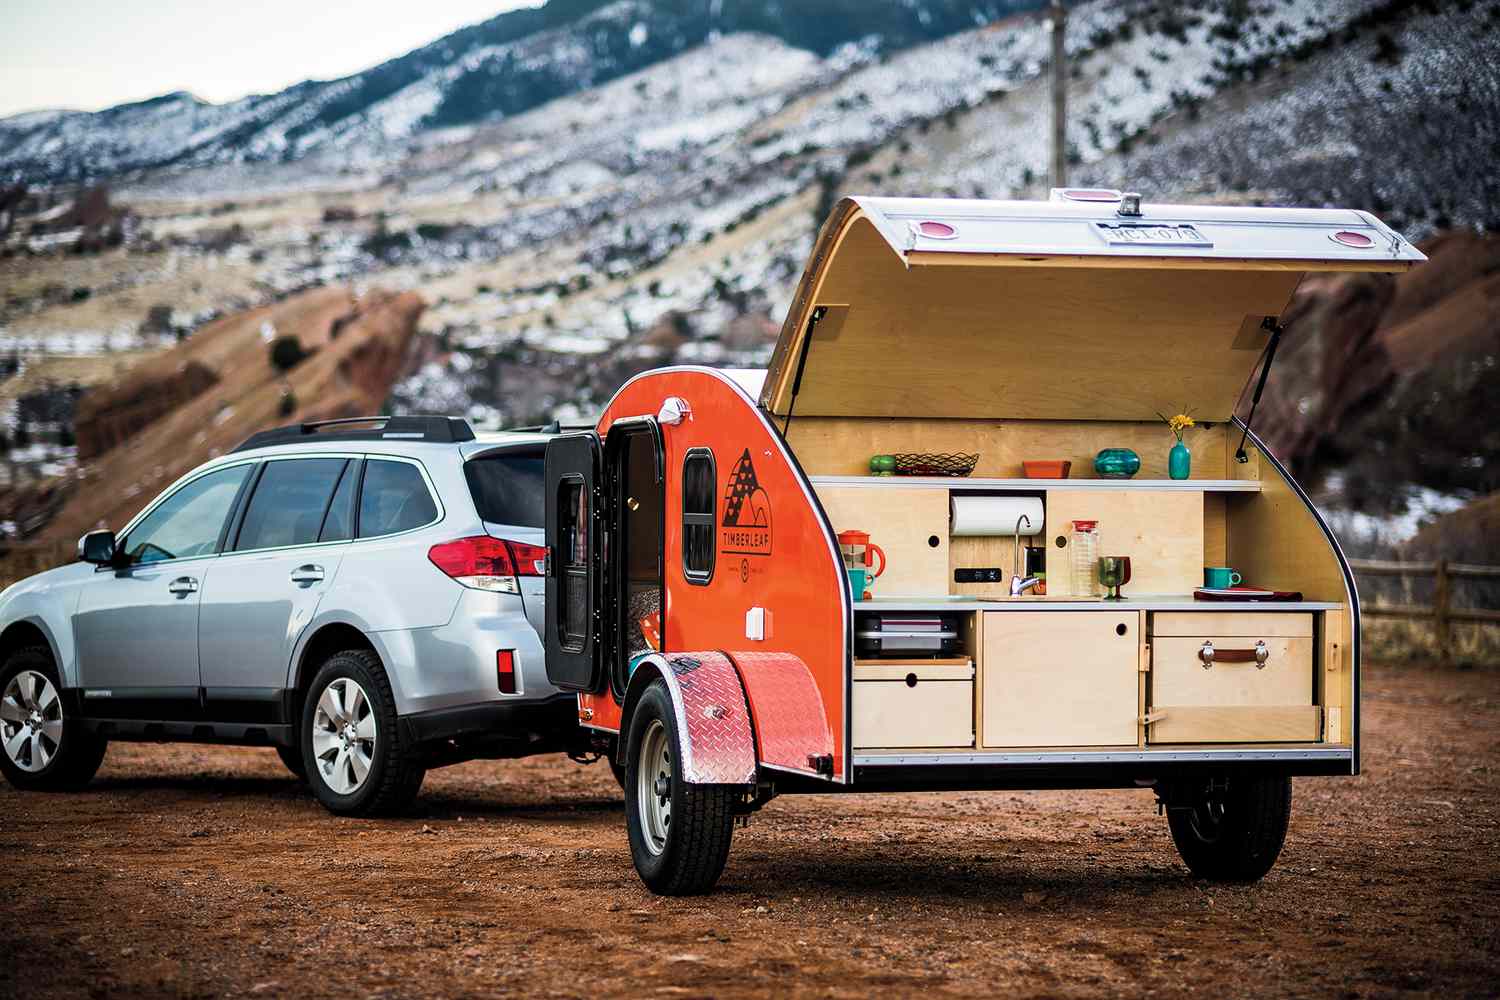 A Timberleaf tear drop camper trailer